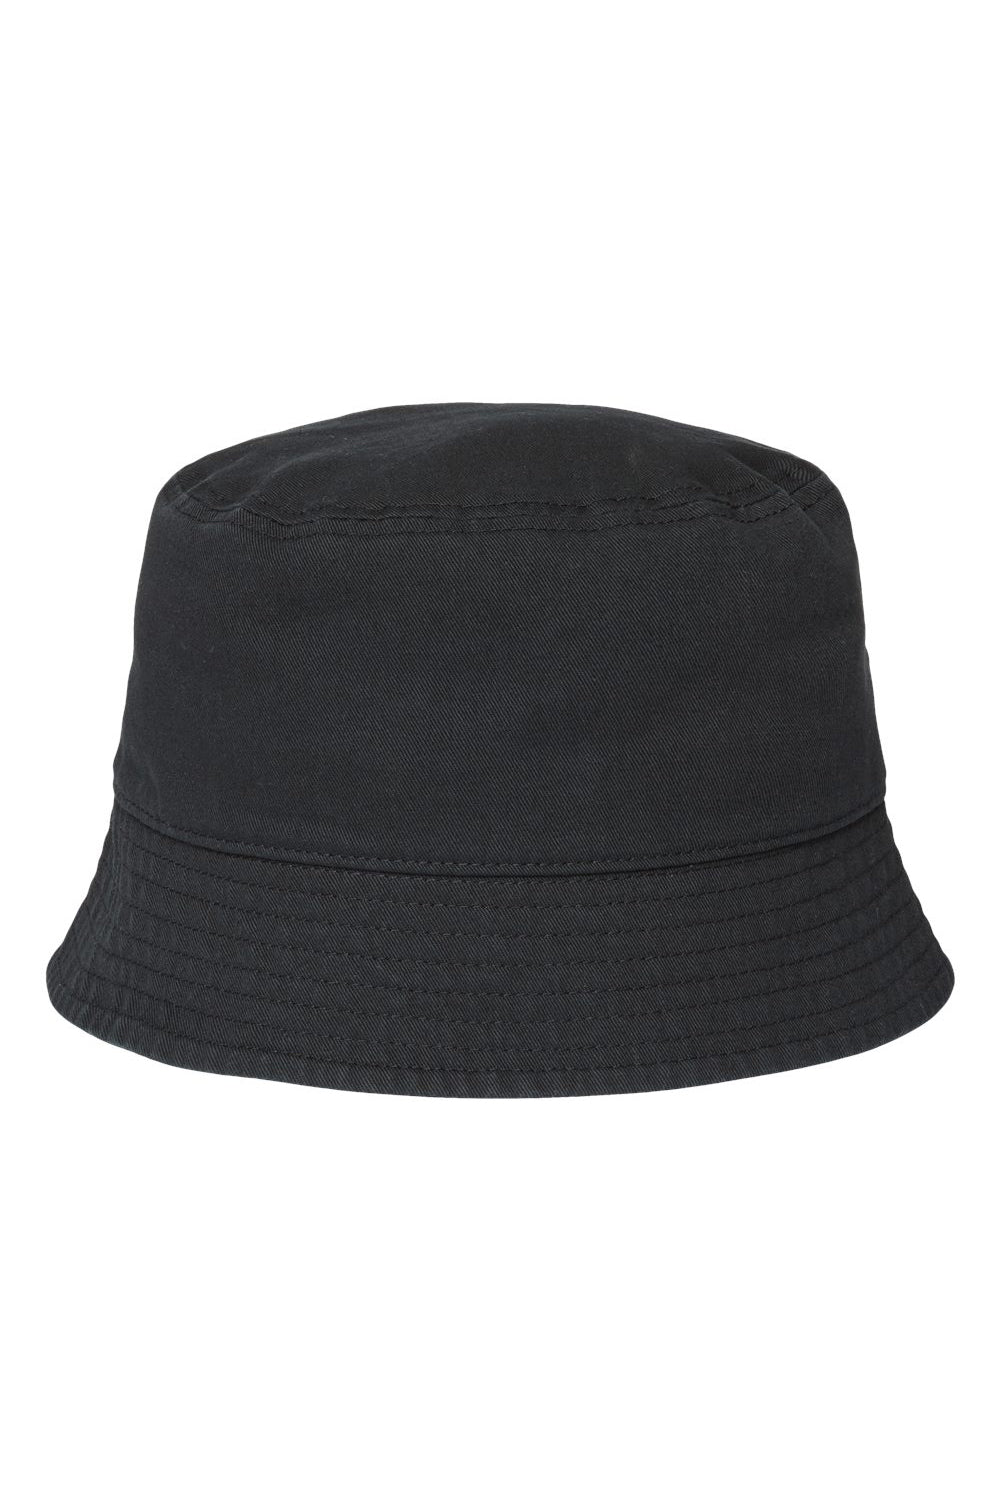 Atlantis Headwear POWELL Mens Sustainable Bucket Hat Black Flat Front